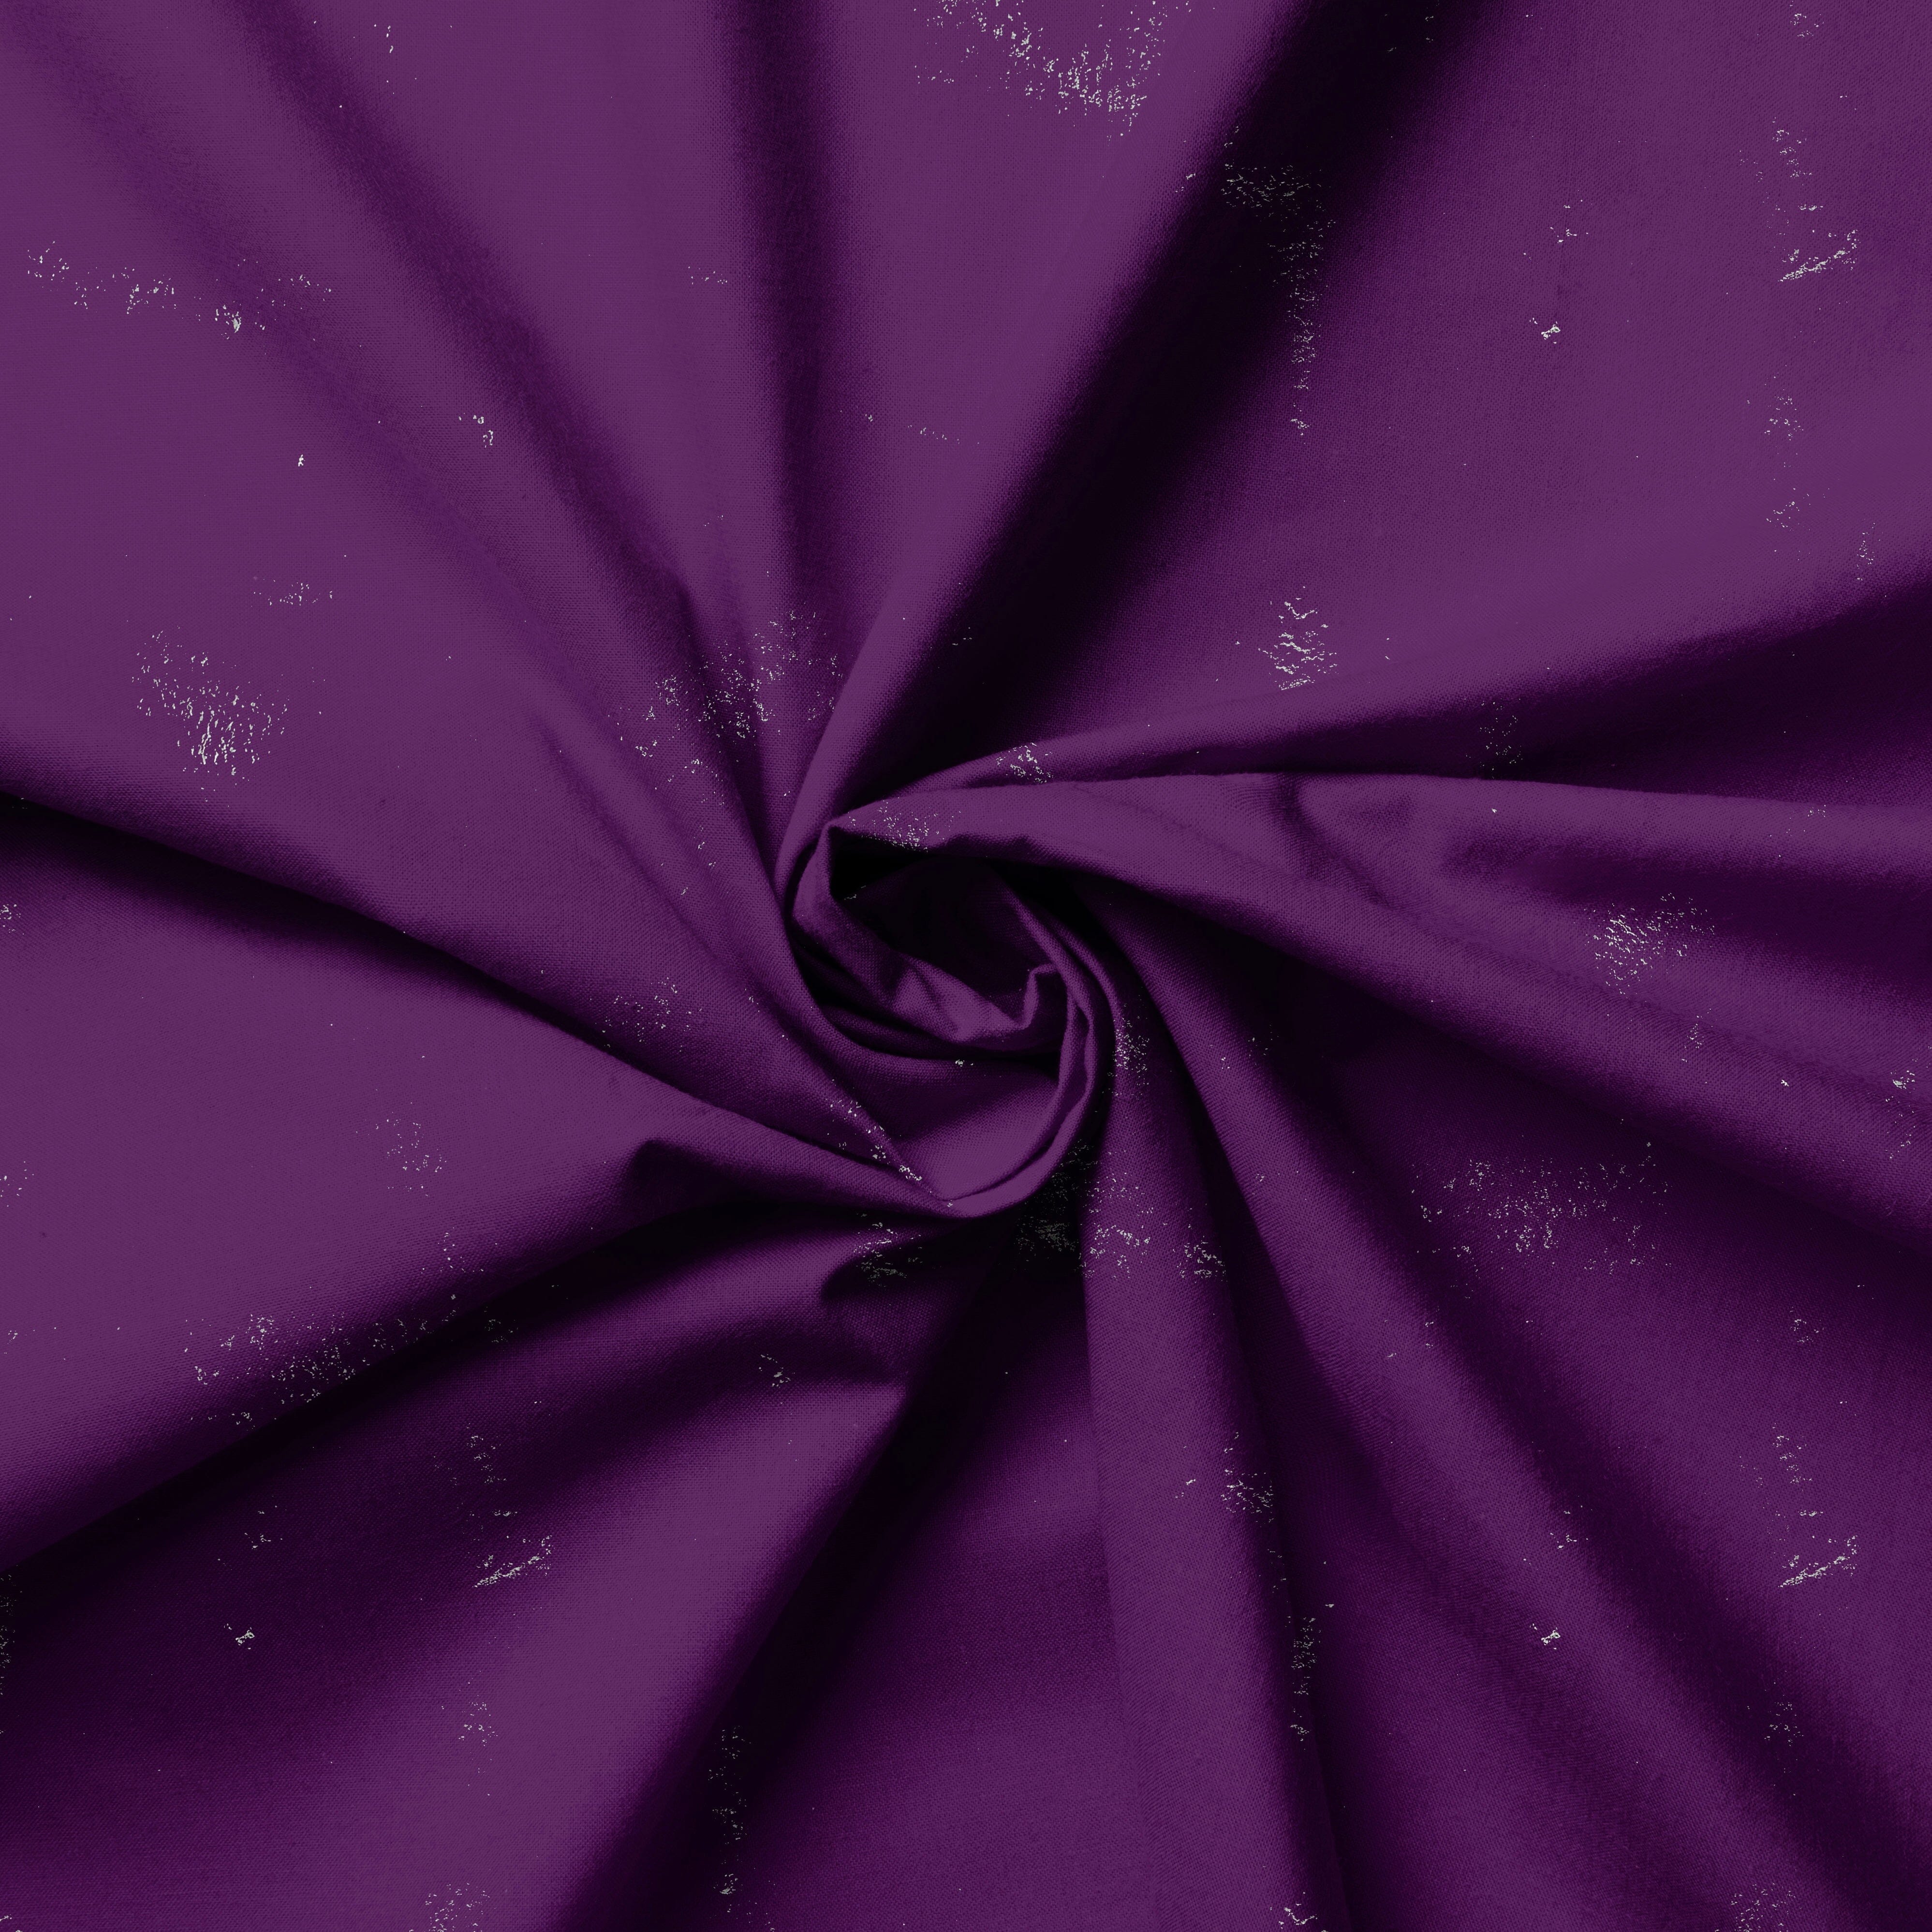 Vorbestellung Sporty - Bade-/Sportmaschenware Ambrosia Paint violet Fabric poshpinks